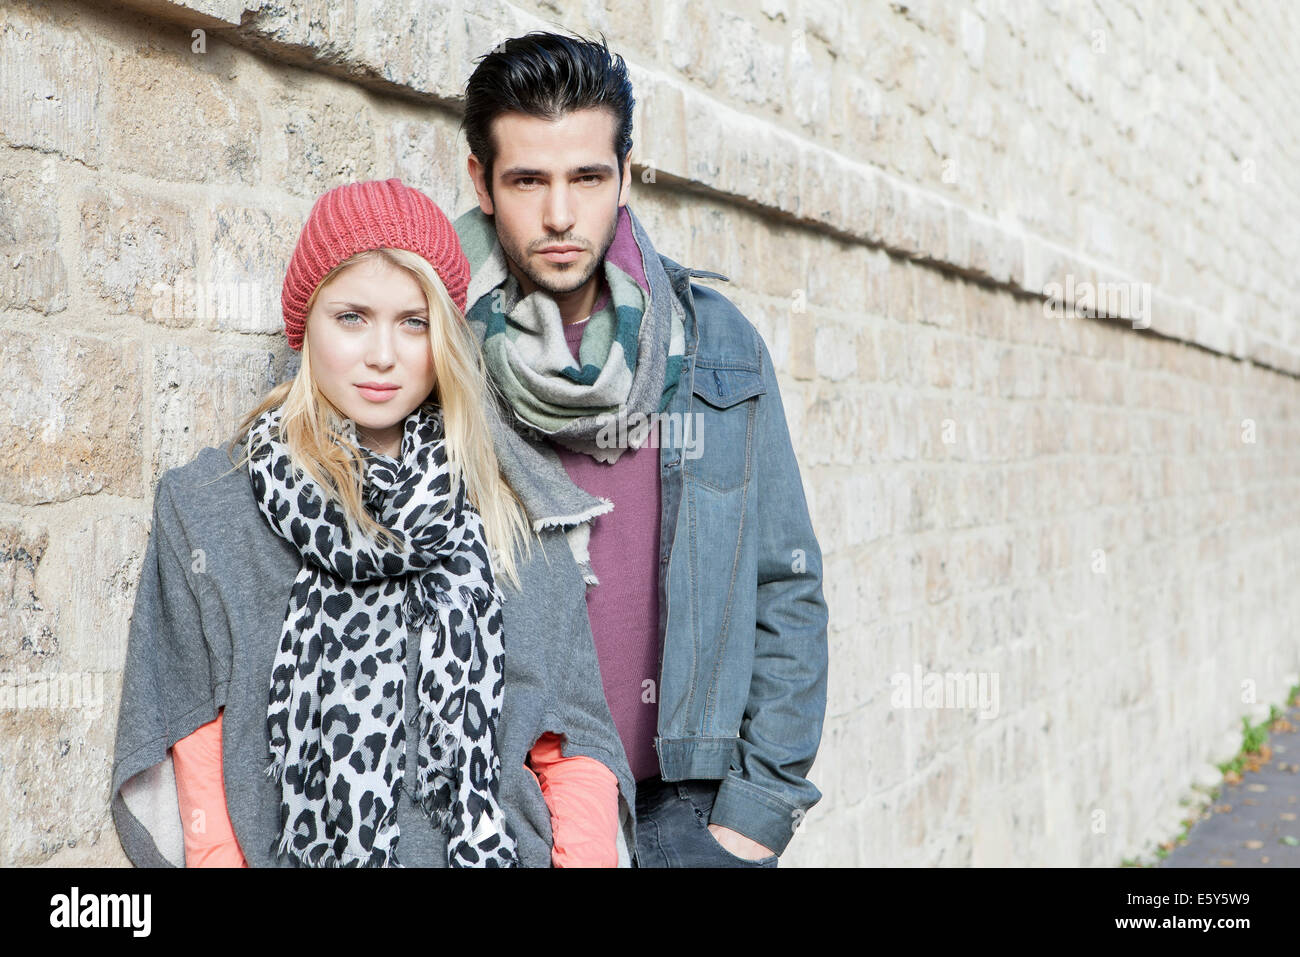 Fashionable young couple, portrait Stock Photo